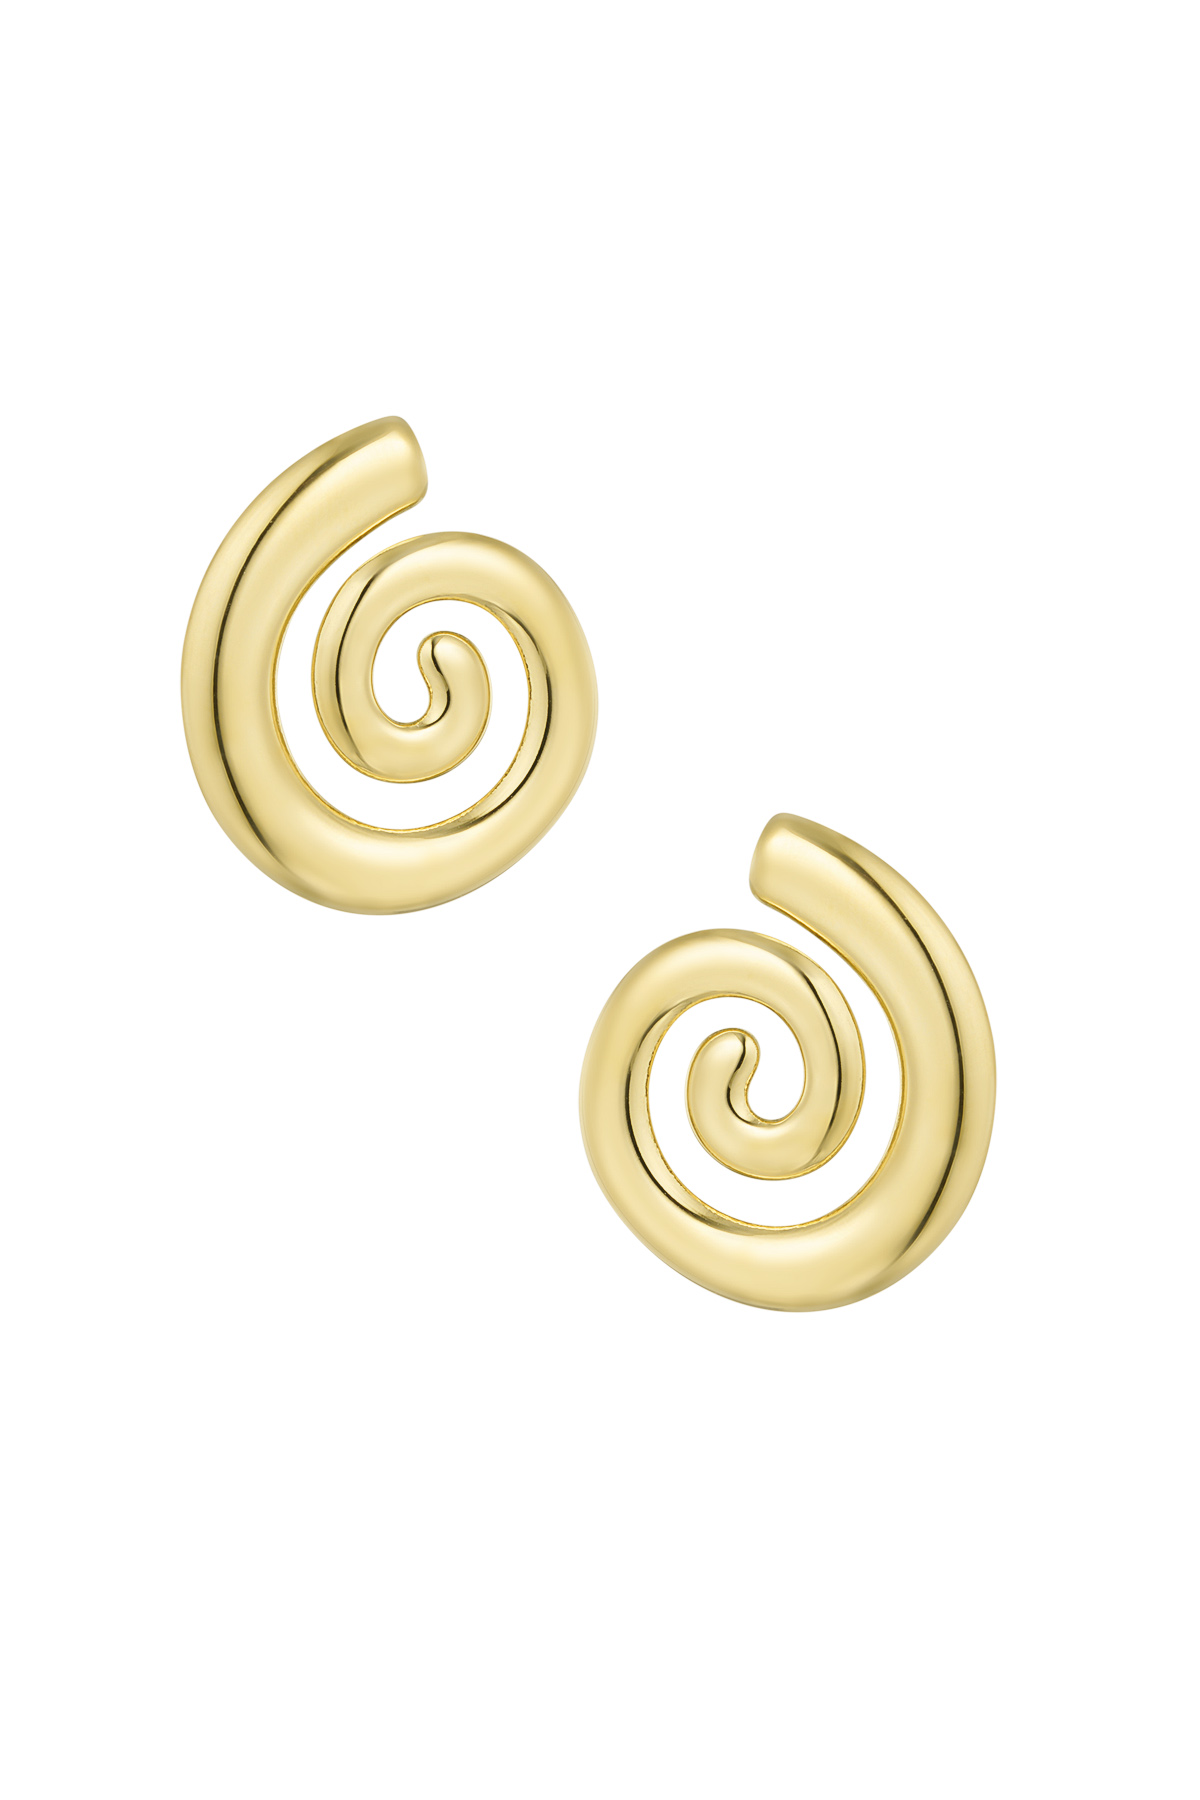 Earrings small swirly wave - gold